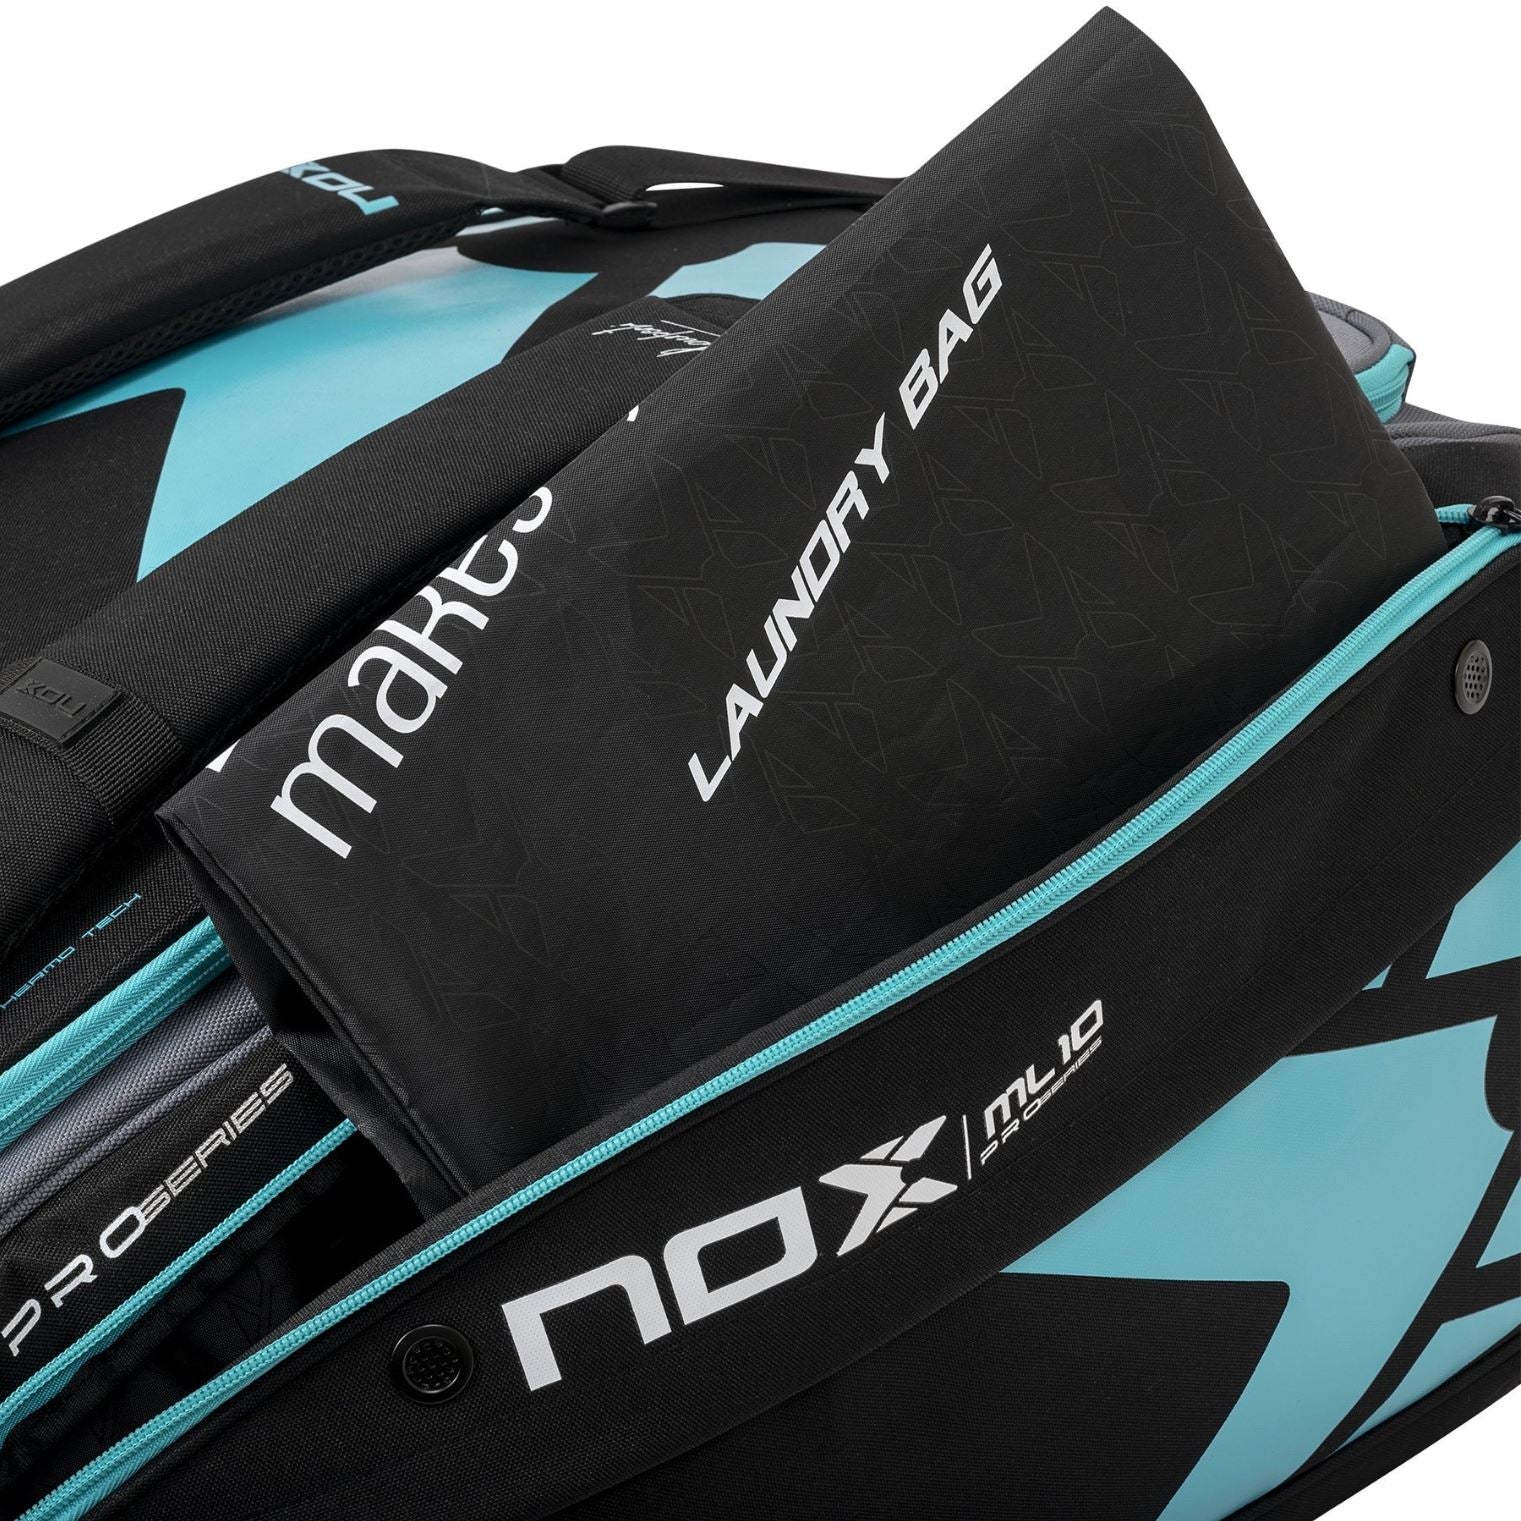 Nox ML10 Competition XL Compact Padel Bag